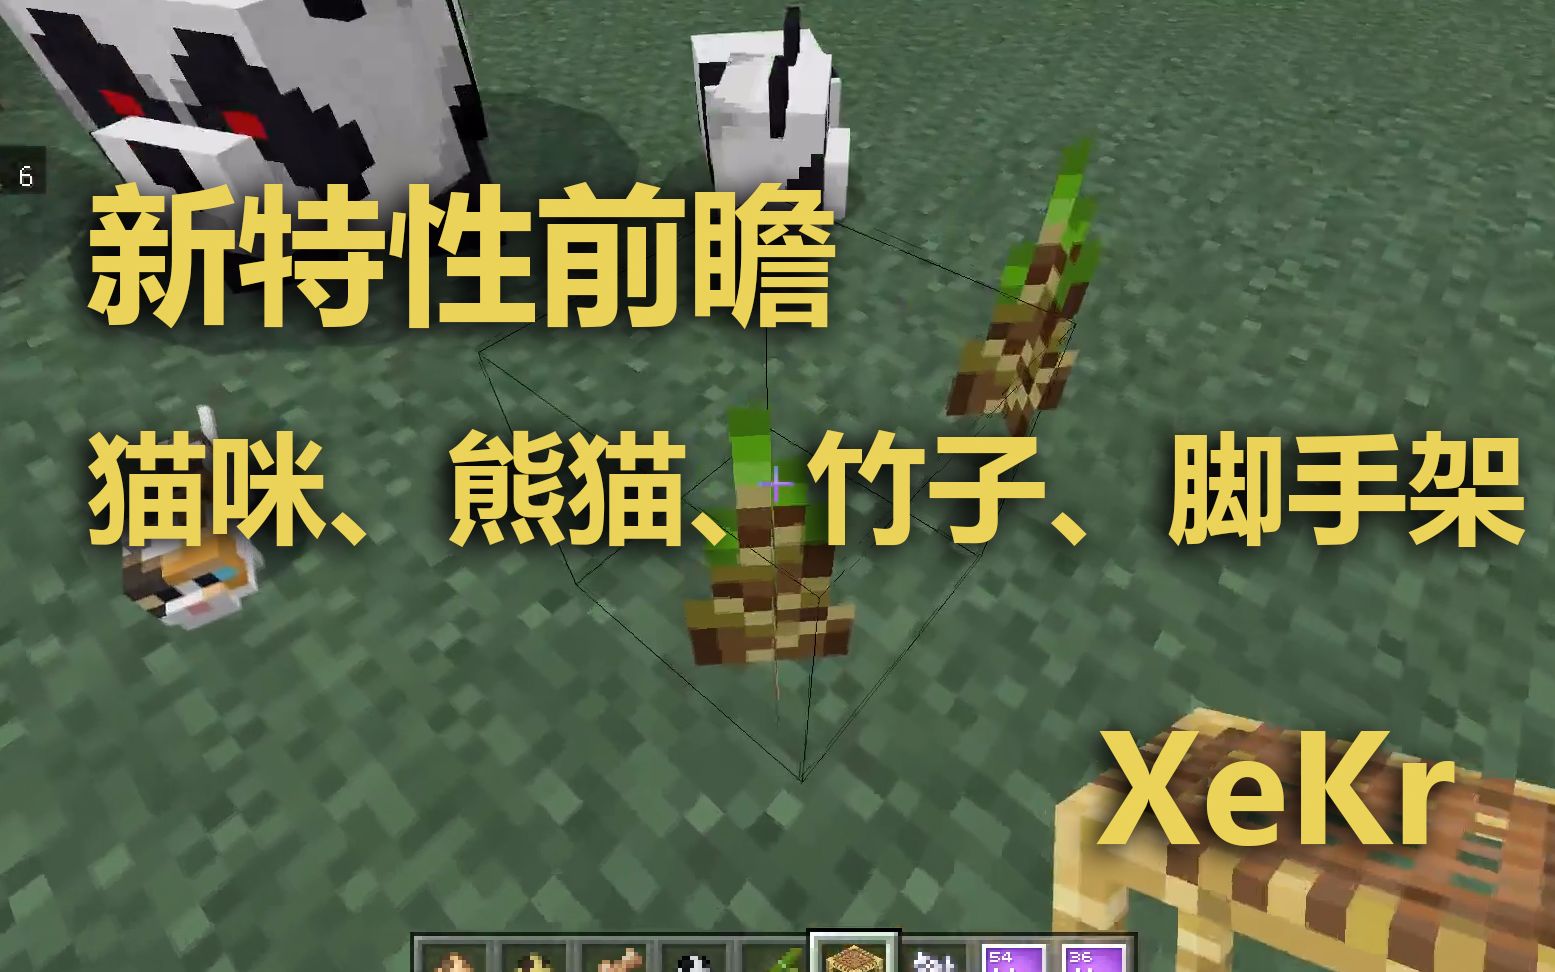 Xekr 喵咪 熊猫 竹子 脚手架 Minecraft新特性前瞻 哔哩哔哩 つロ干杯 Bilibili